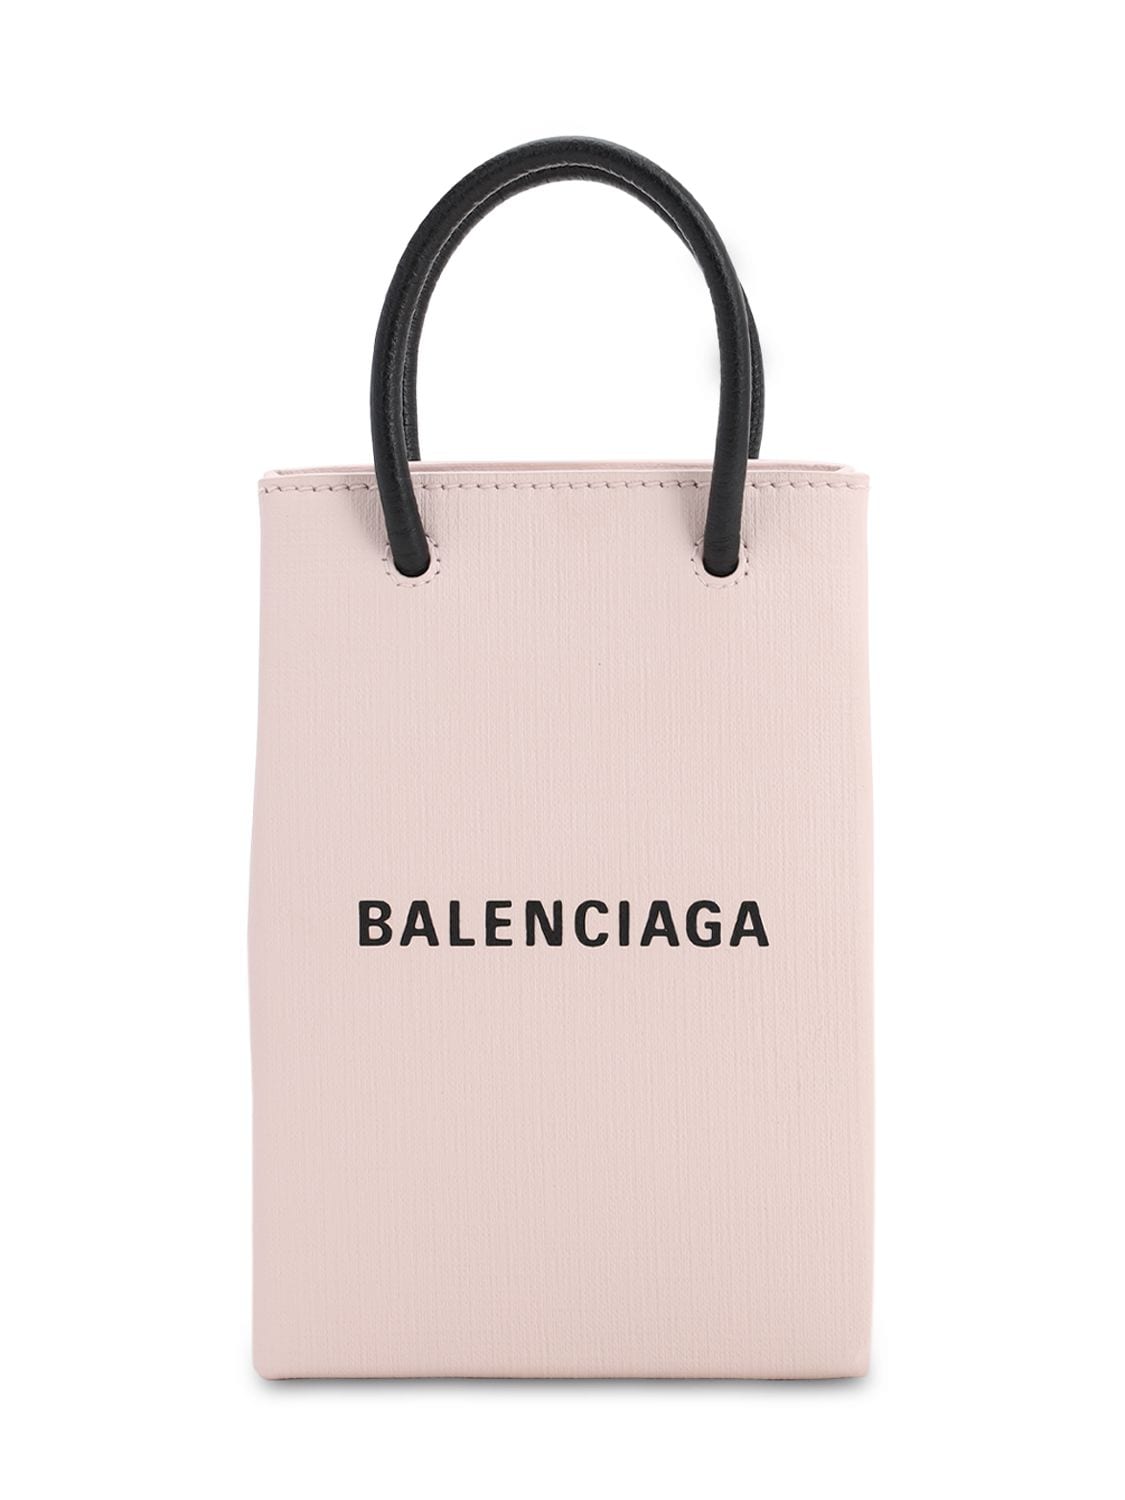 Balenciaga Phone Holder Shopping Bag In Light Rose Leather